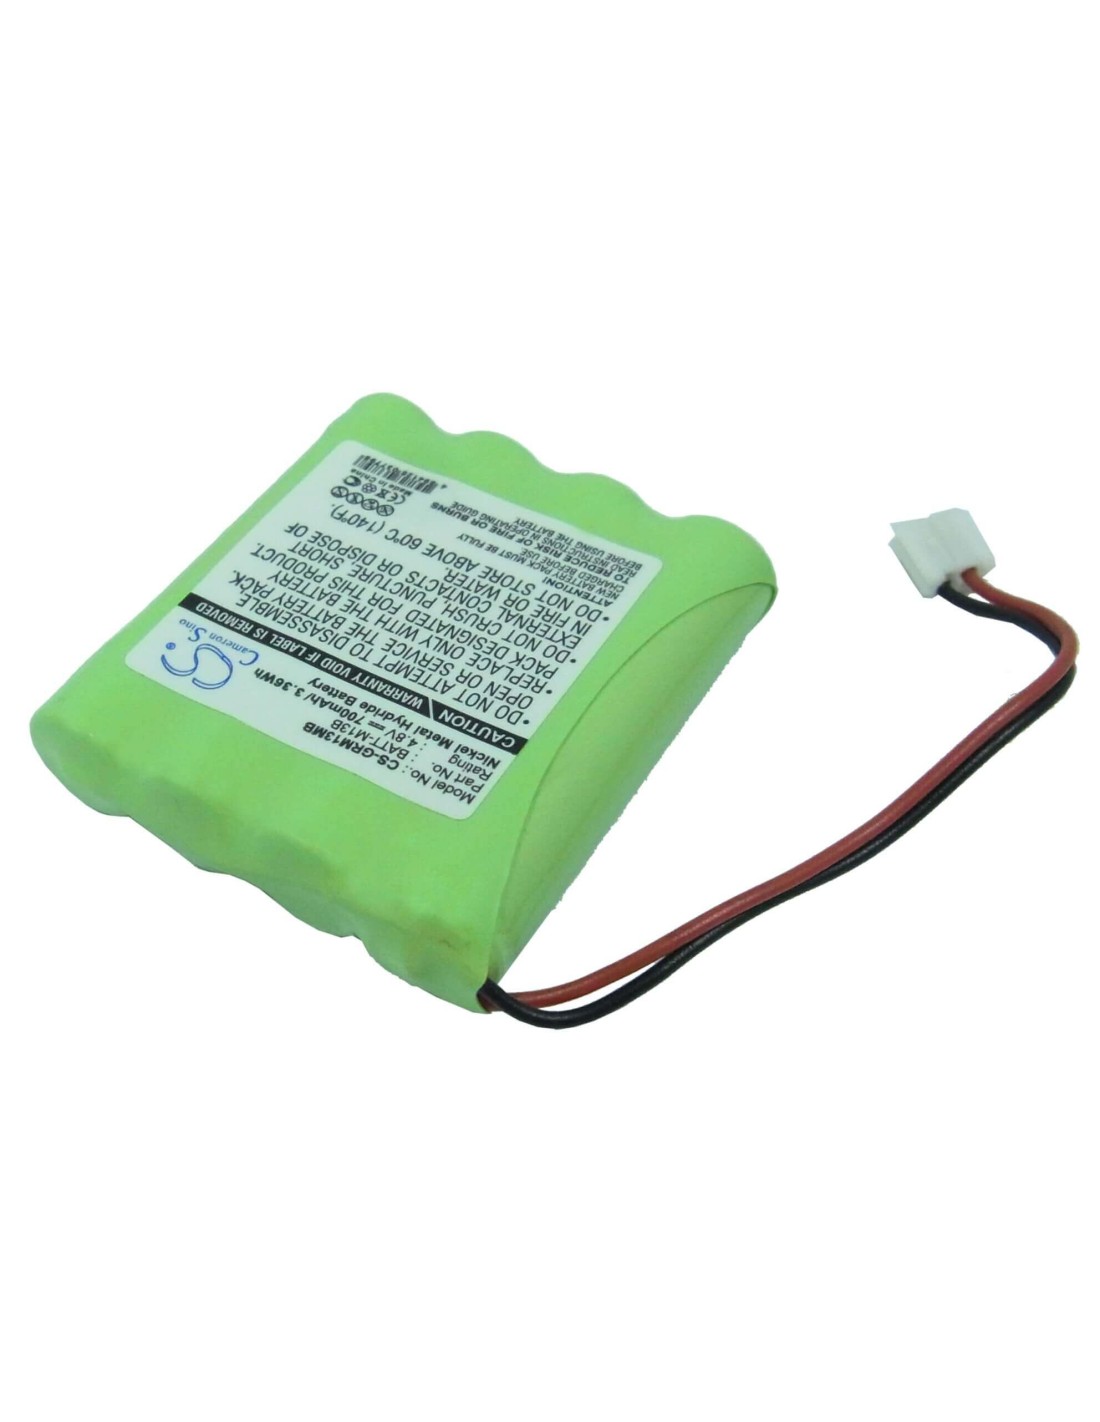 Battery for Graco, M, M13b8720-000 4.8V, 700mAh - 3.36Wh